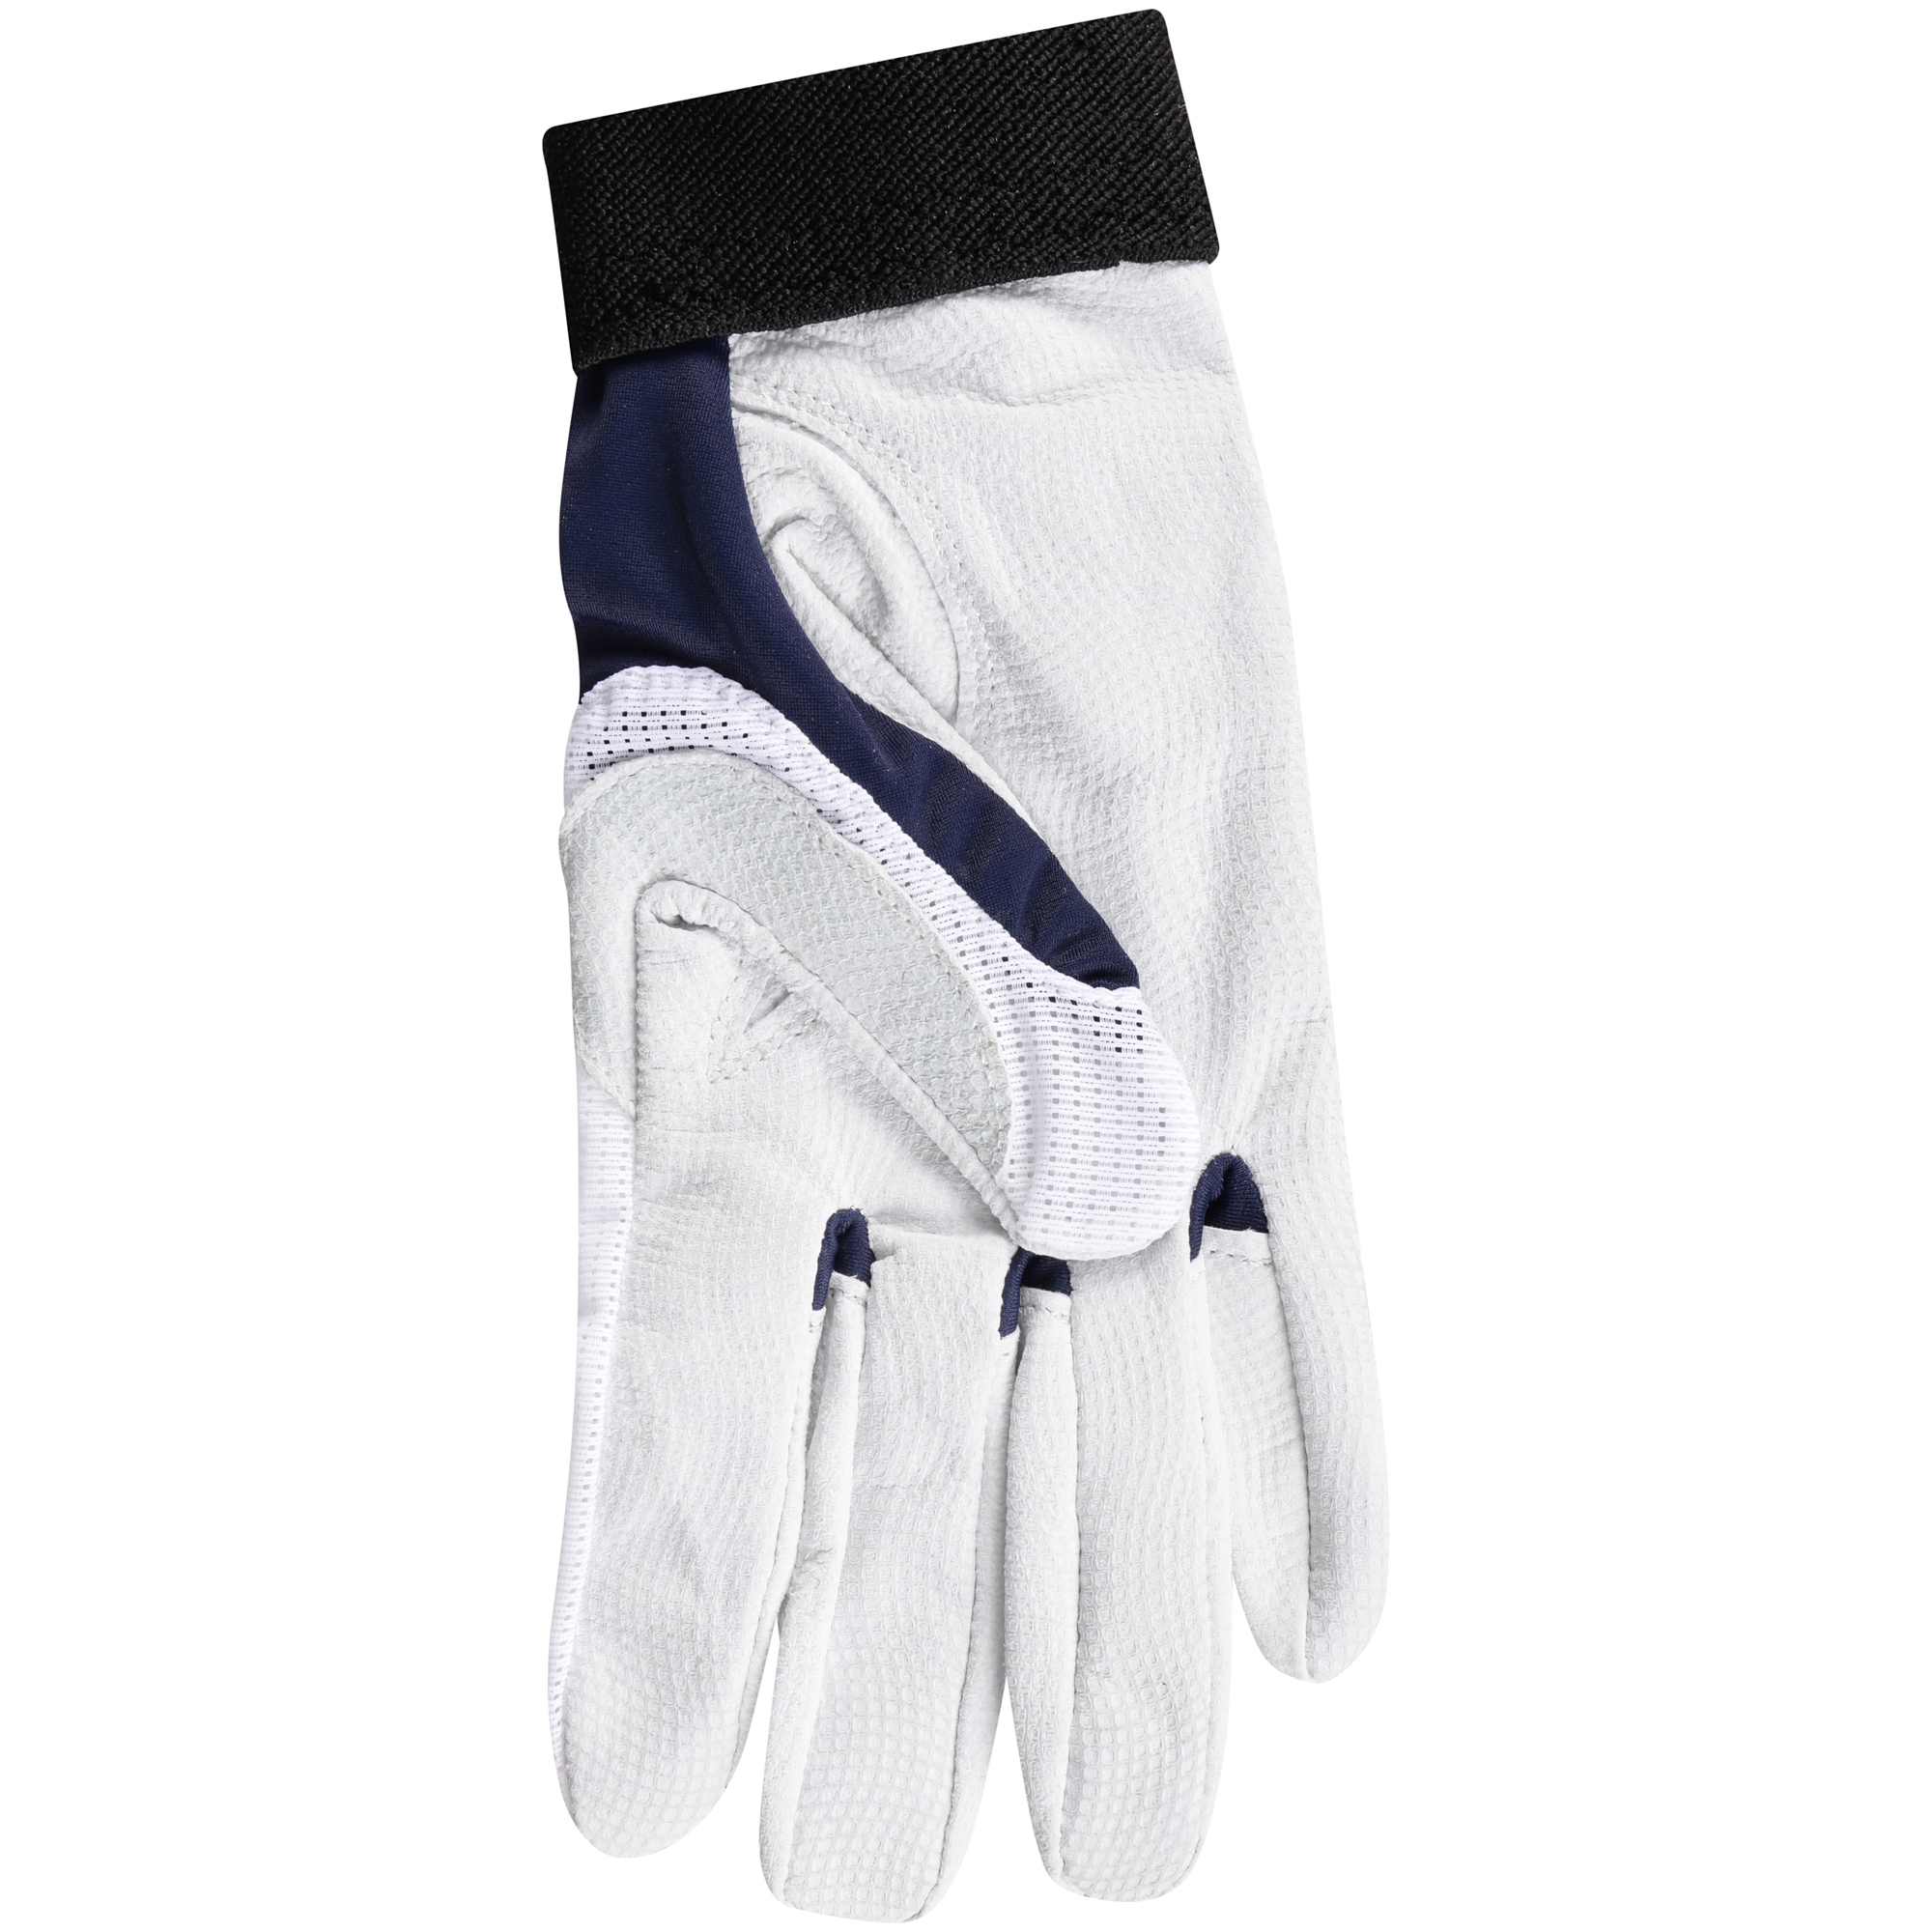 Max Grip Racquetball Glove - Burghardt Sporting Goods